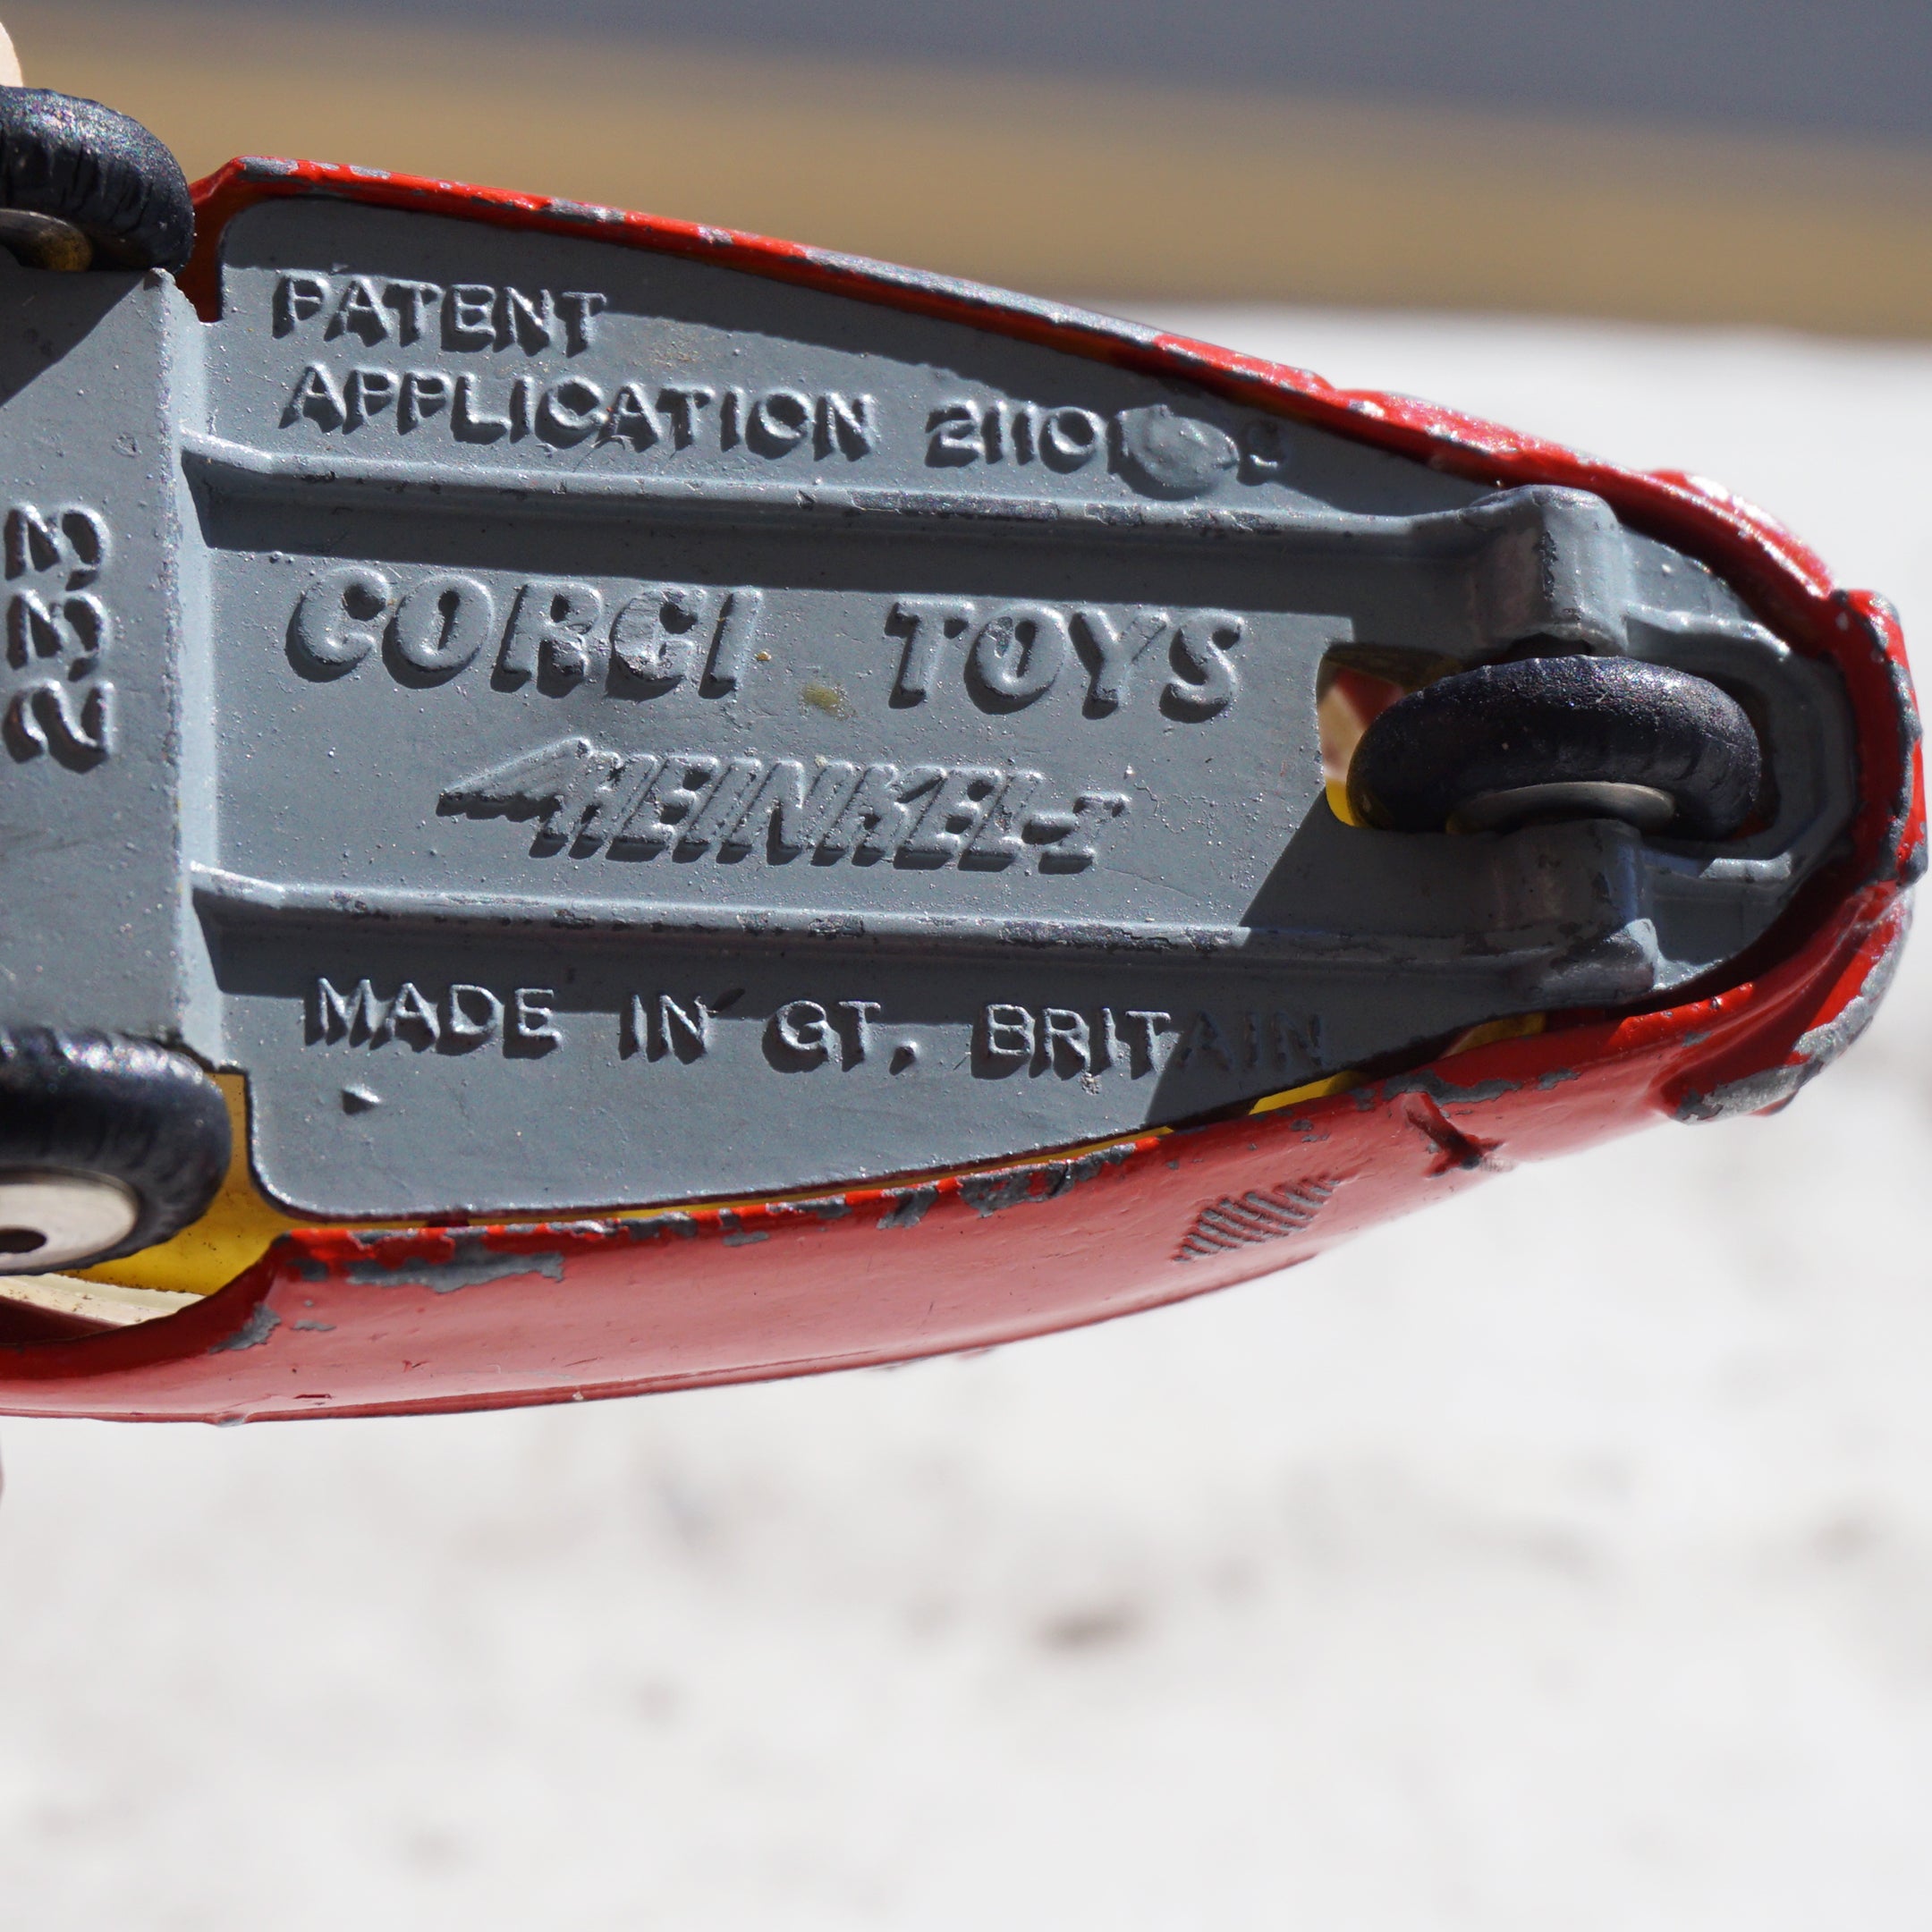 Vintage HEINKEL Corgi Toys No. 233 Red Economy Toy Car. Made in Gt. Britain.